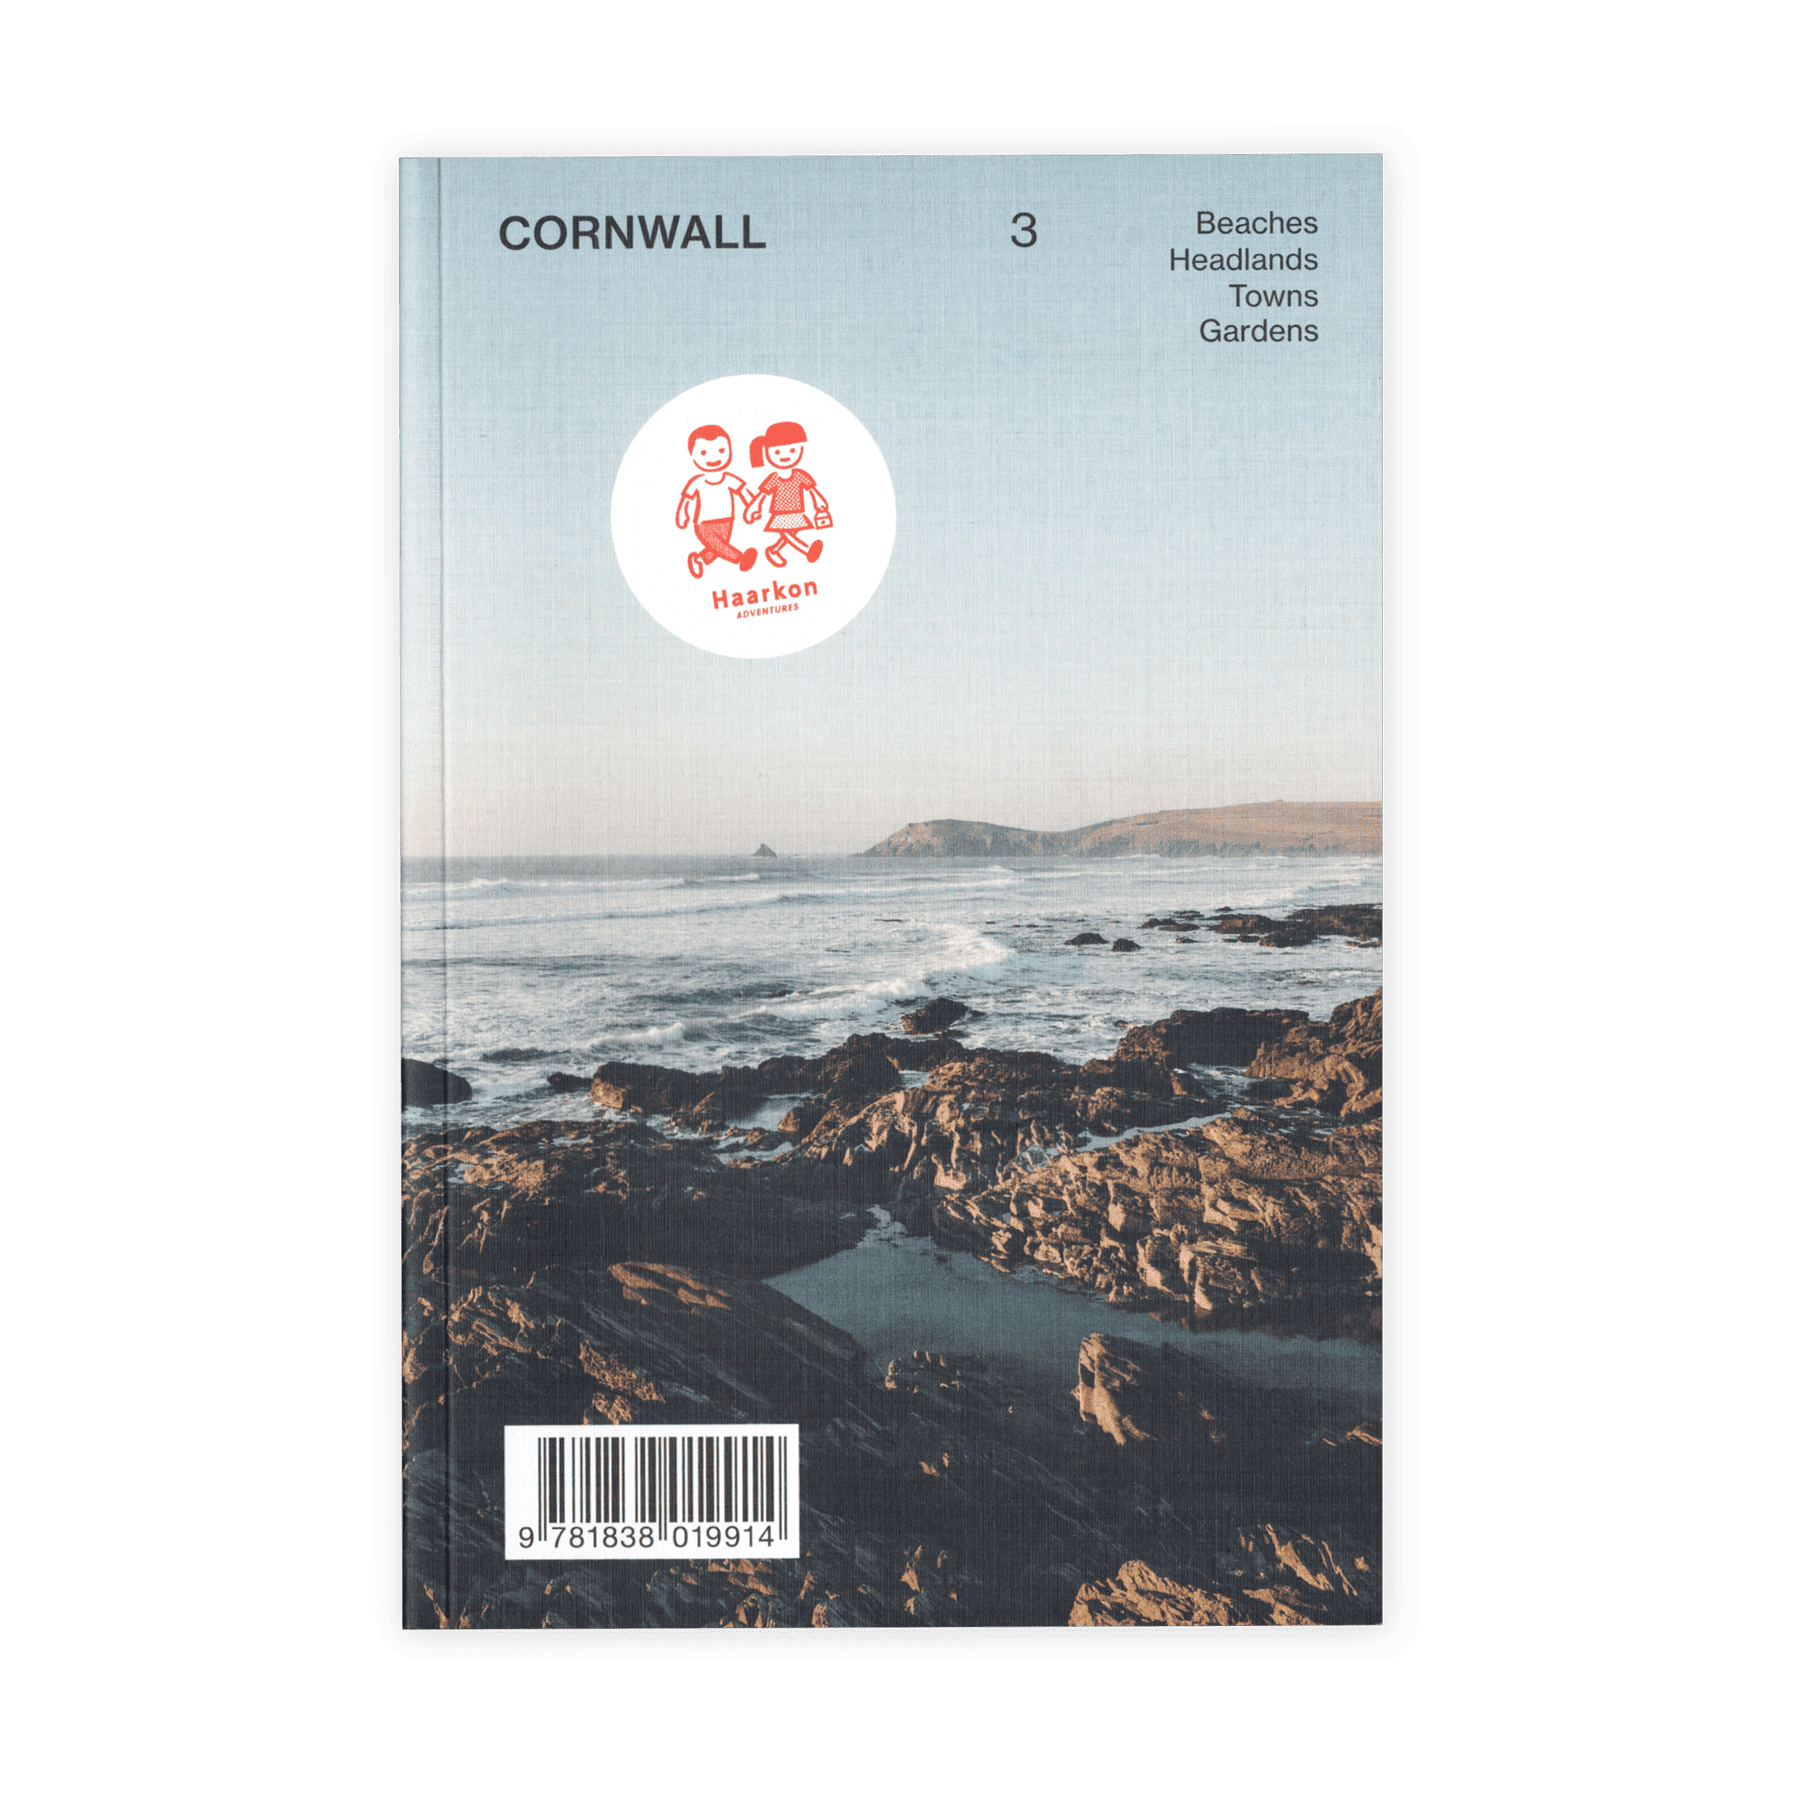 Haarkon Adventures Cornwall book cover